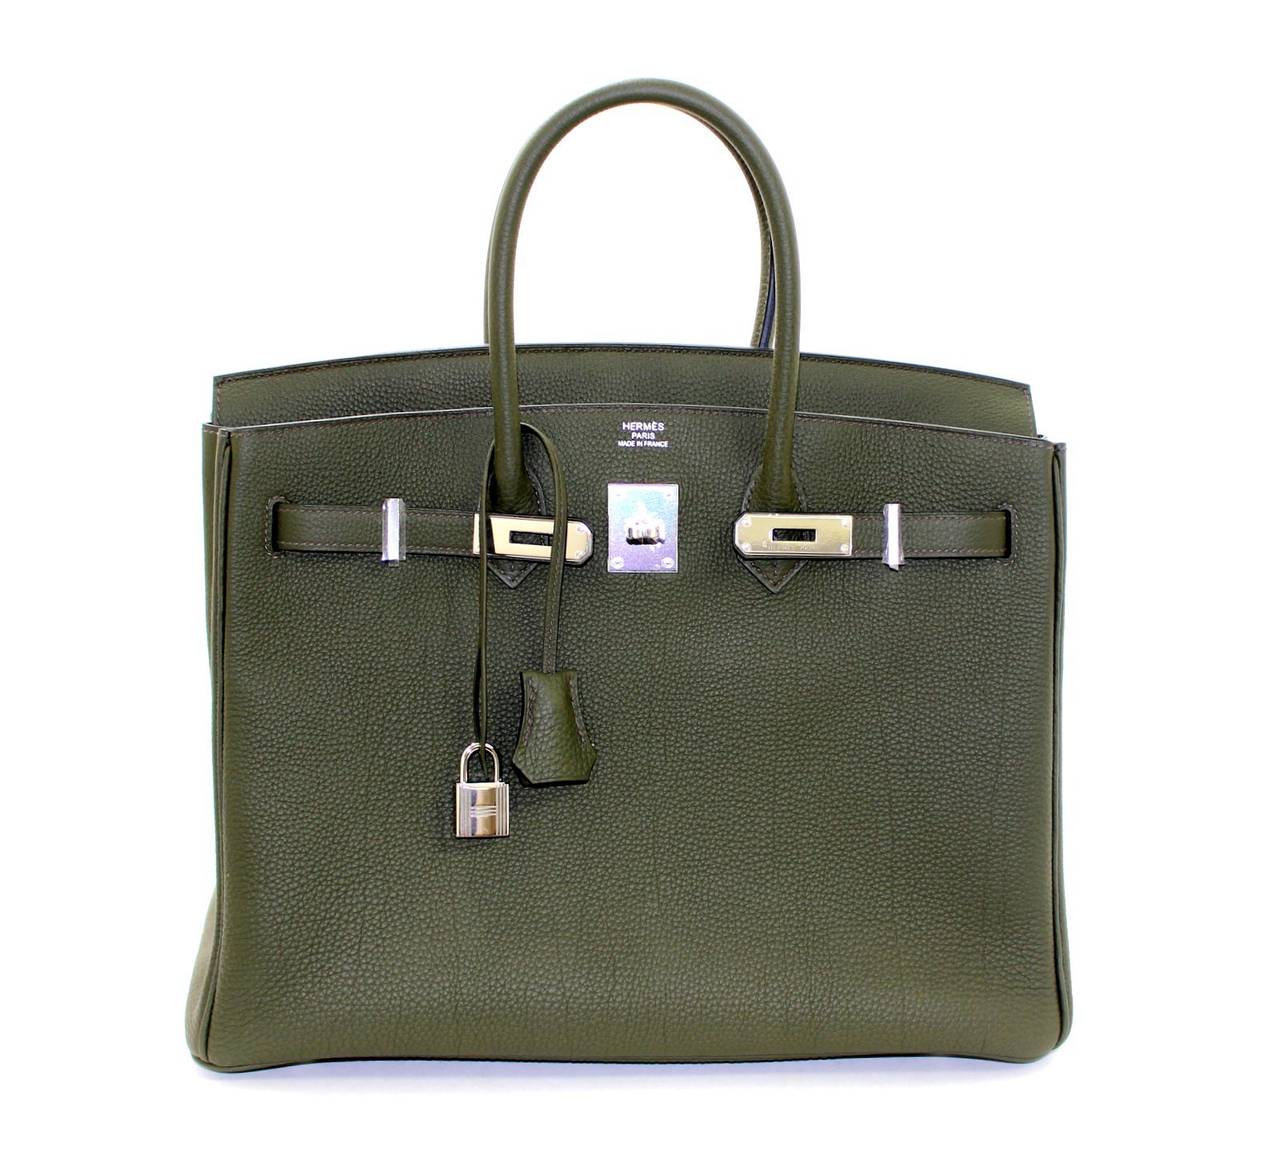 Hermès Vert Olive Togo Leather 35 cm Birkin Bag PHW 3